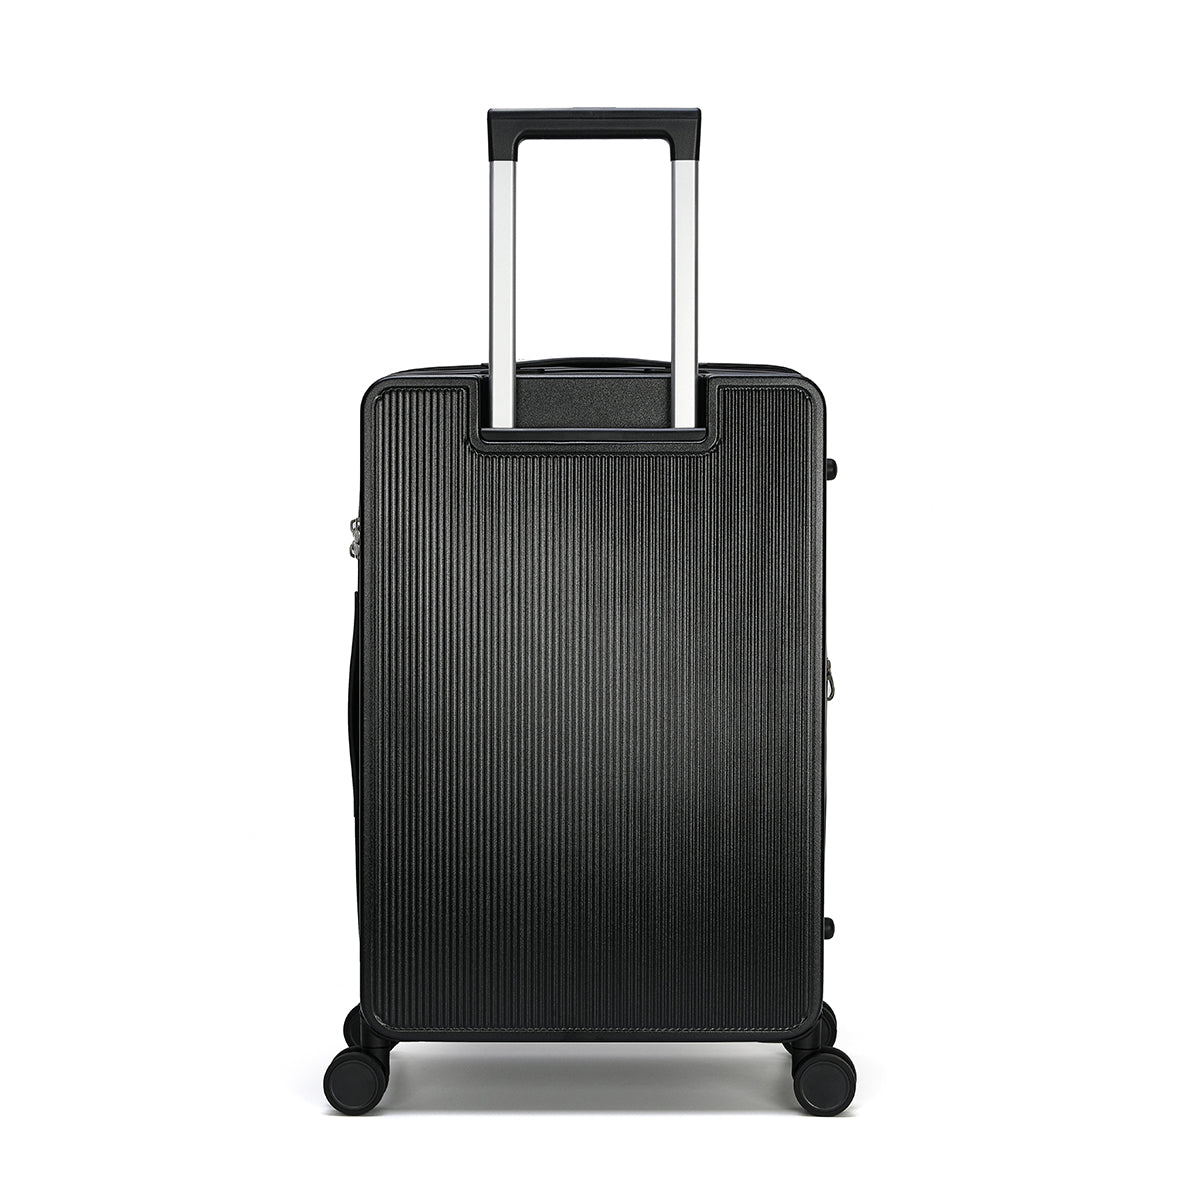 Luxurious polycarbonate travel bags, black color, different sizes